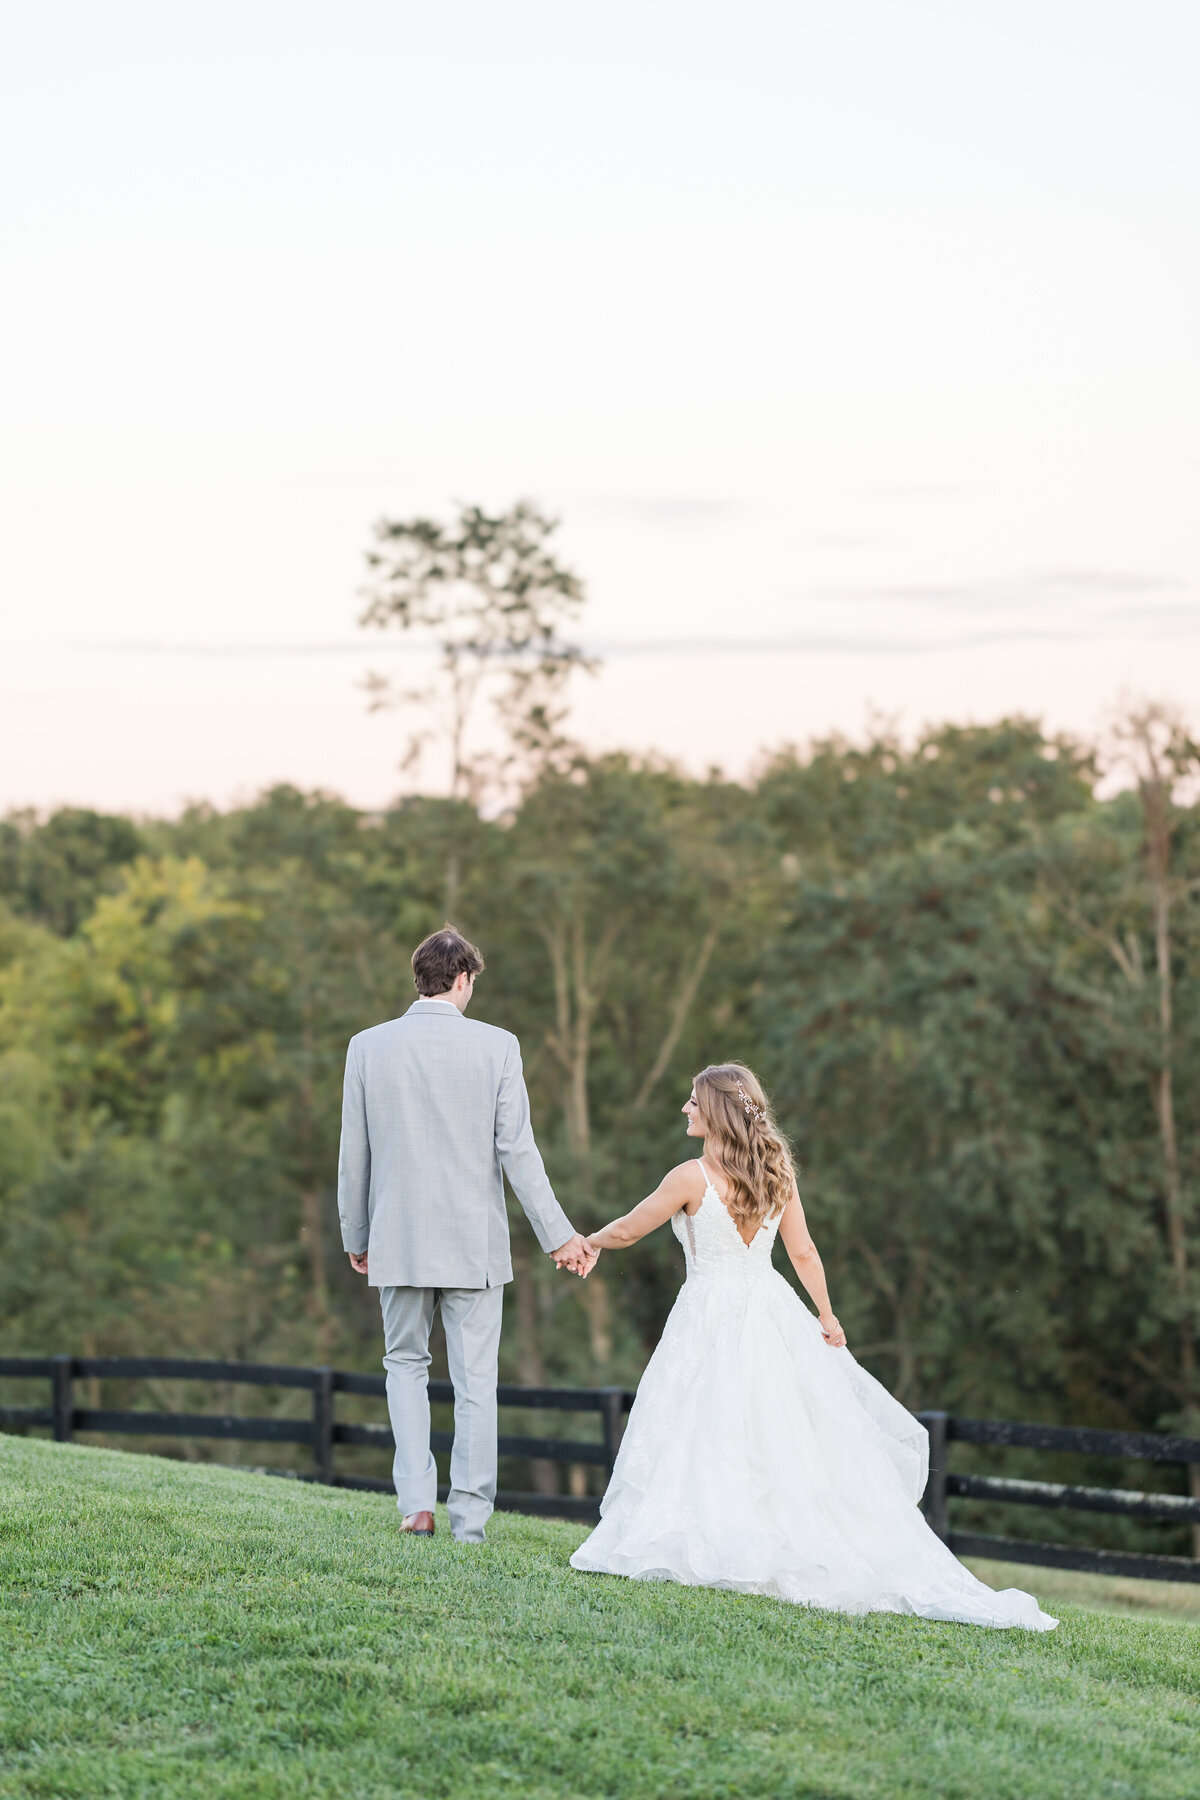 Kelsie & Marc Wedding - Taylor'd Southern Events - Maryland Wedding Photographer -28351